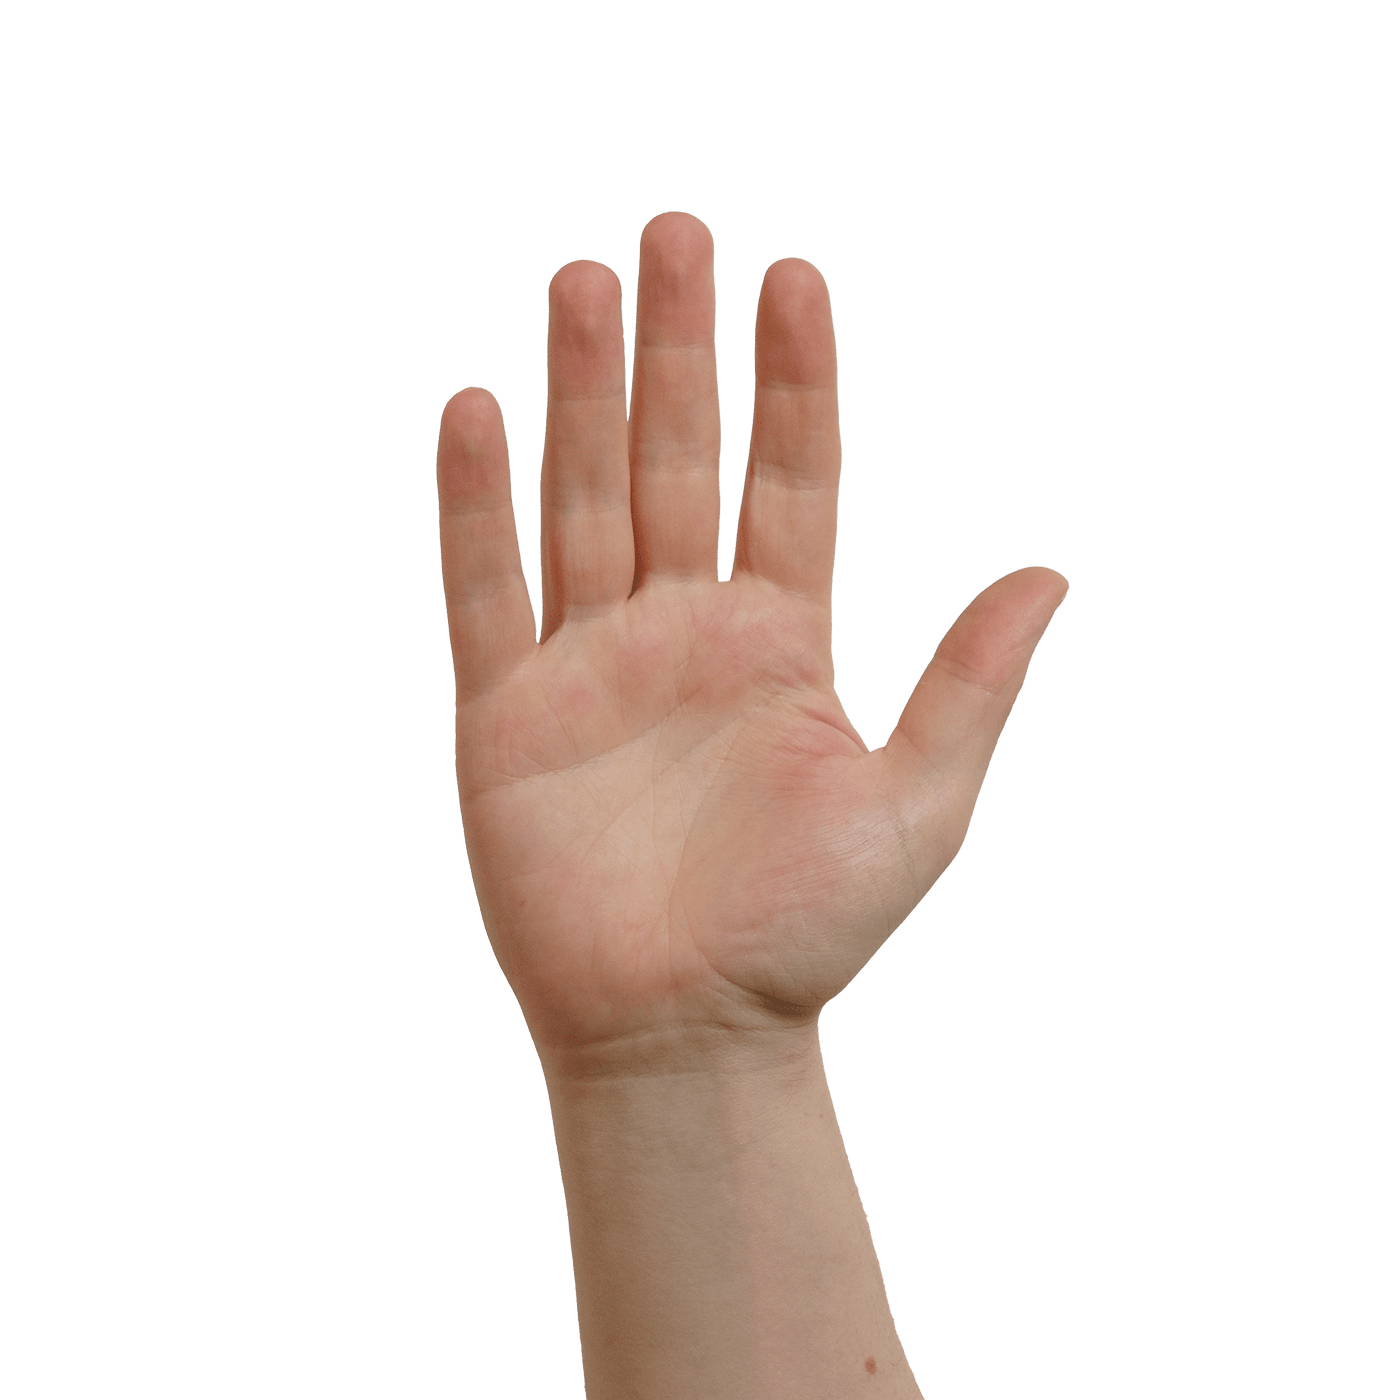 A hand waving hello.